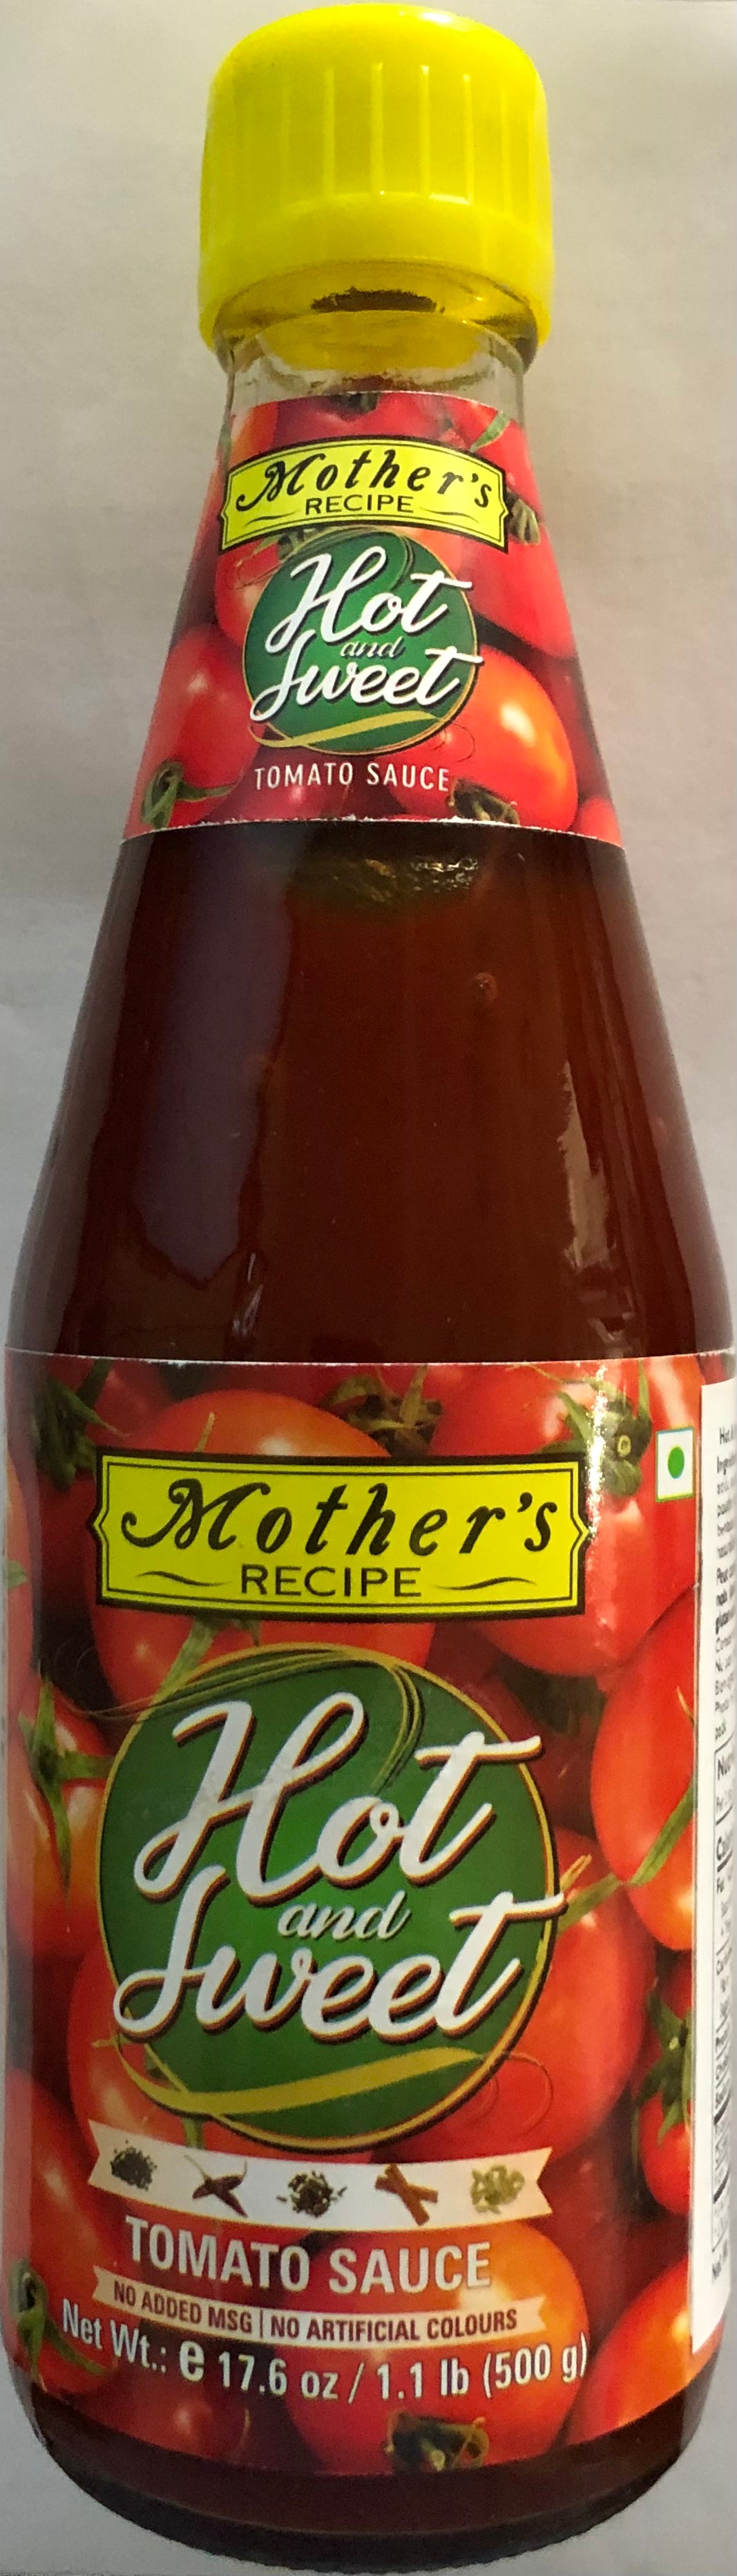 Hot & Sweet Sauce -500g - Mother's Recipe